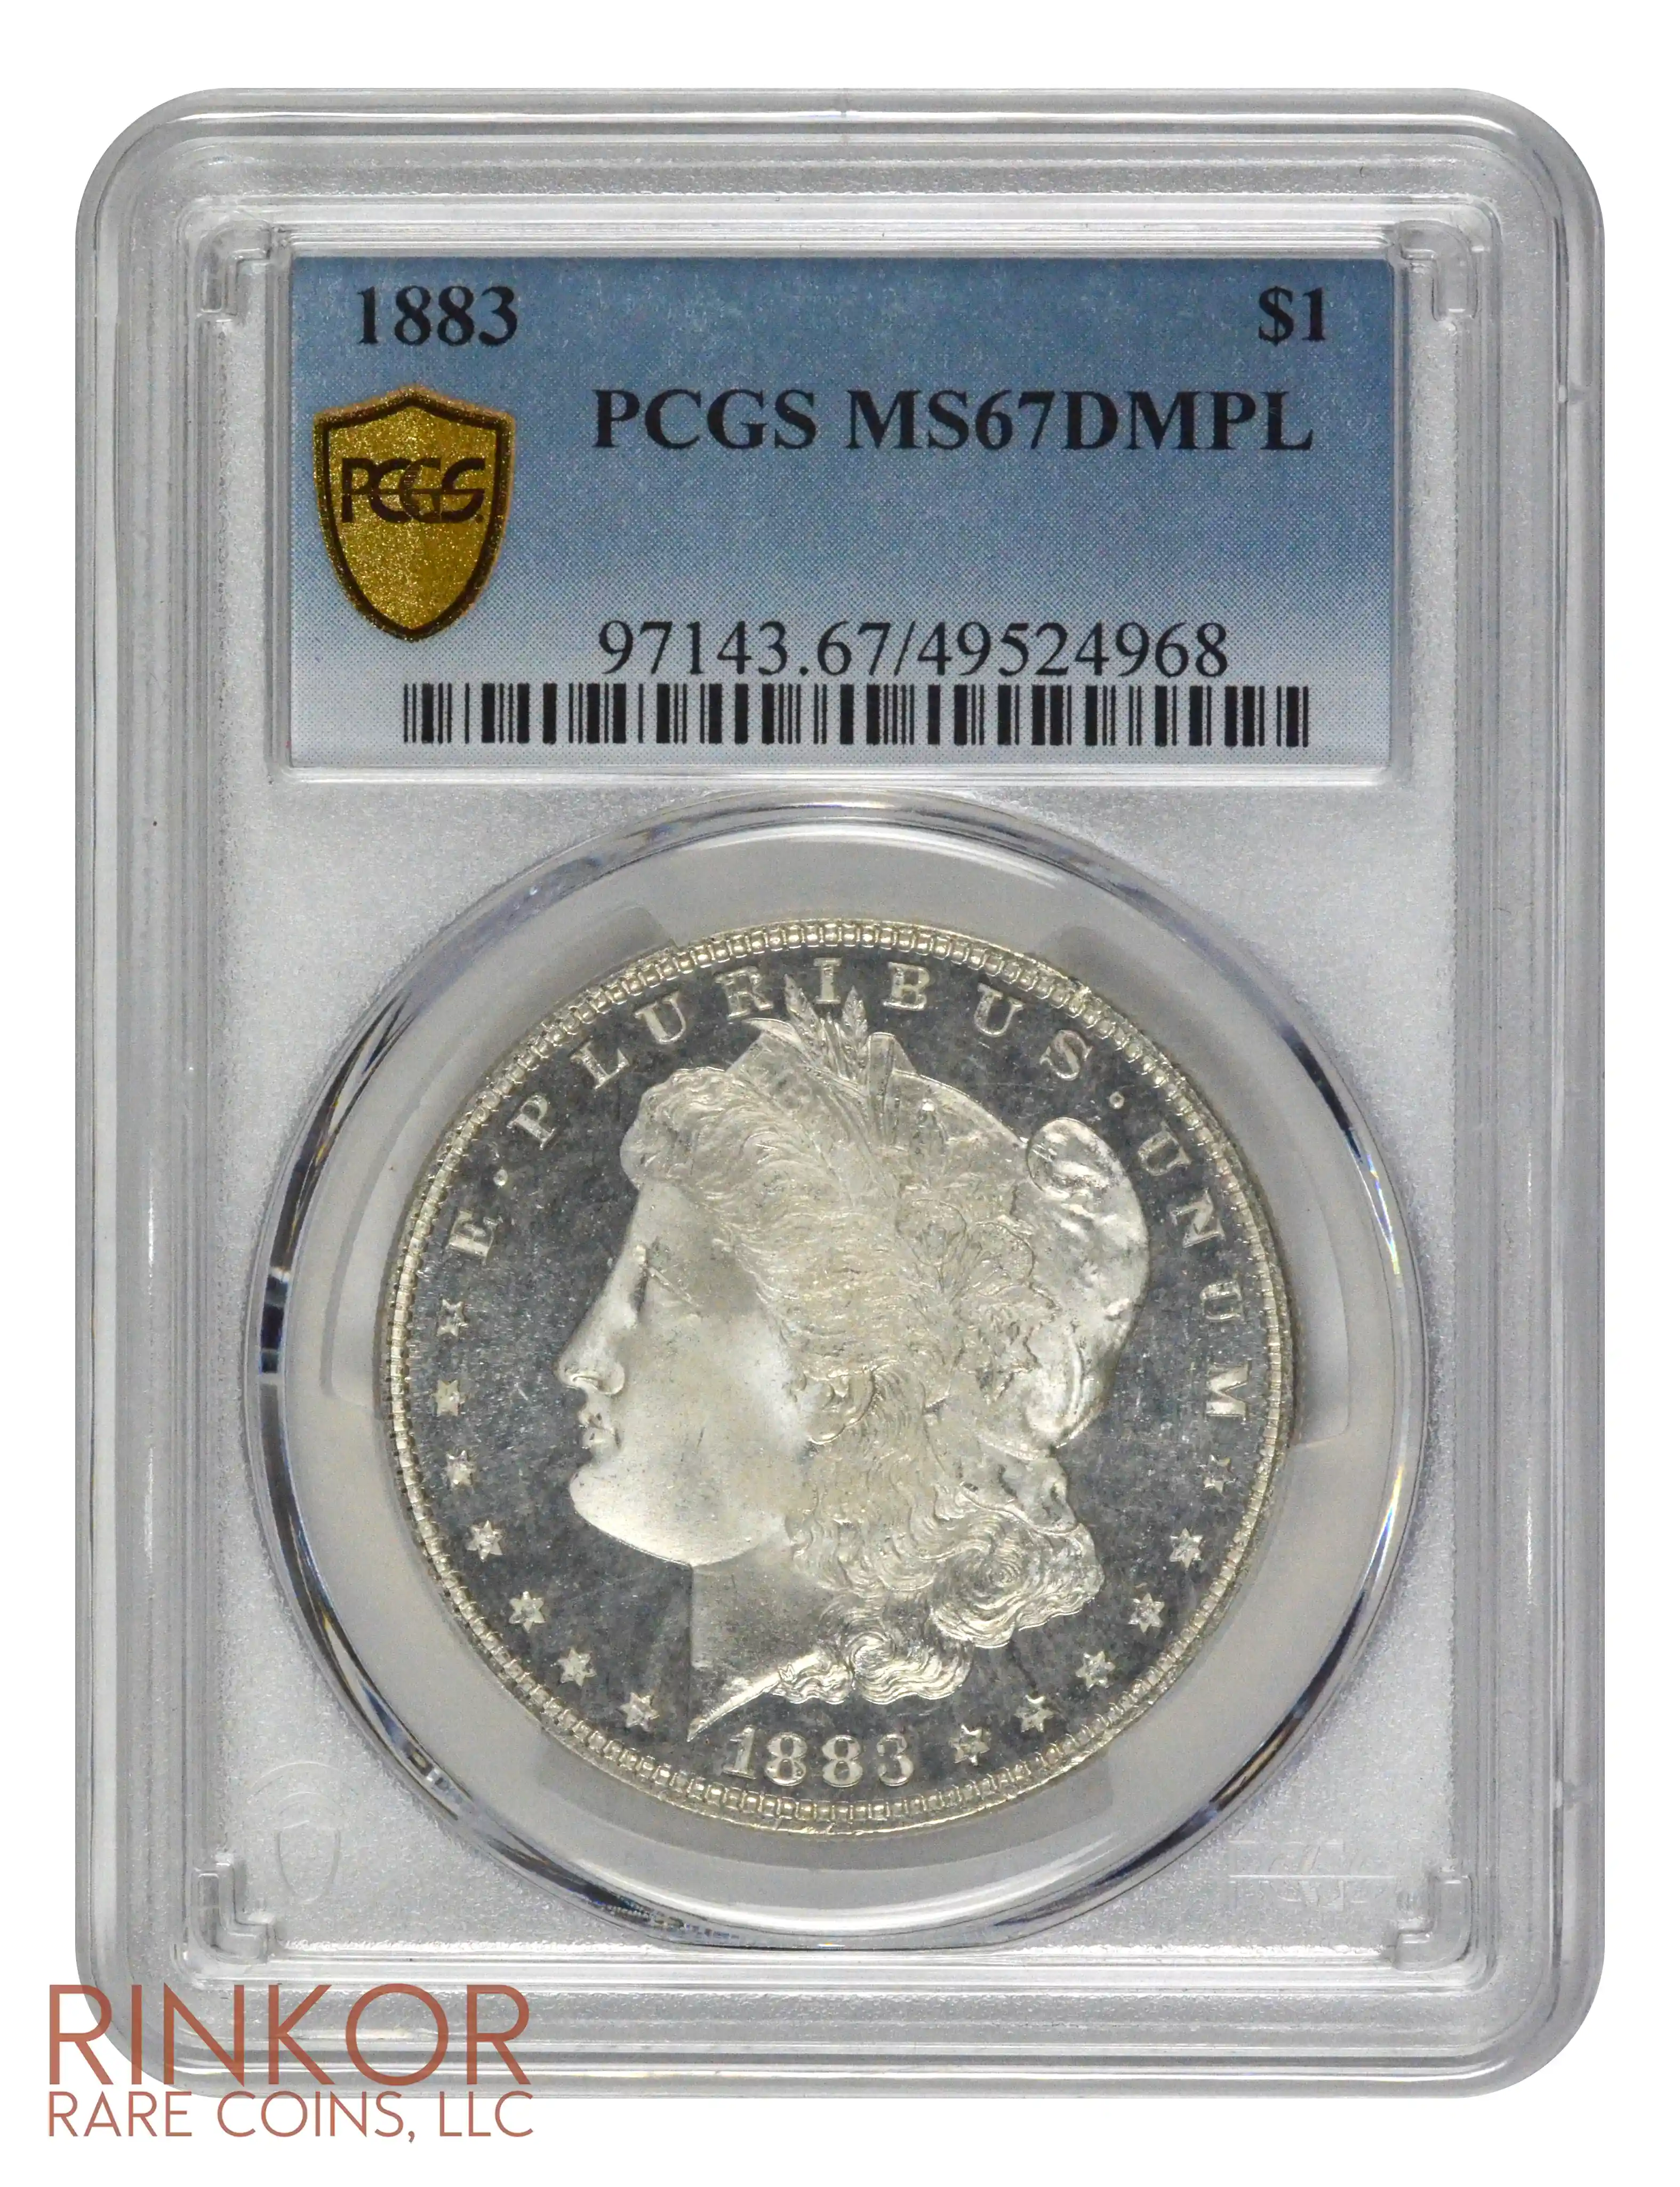 1883 $1 PCGS MS 67 DMPL